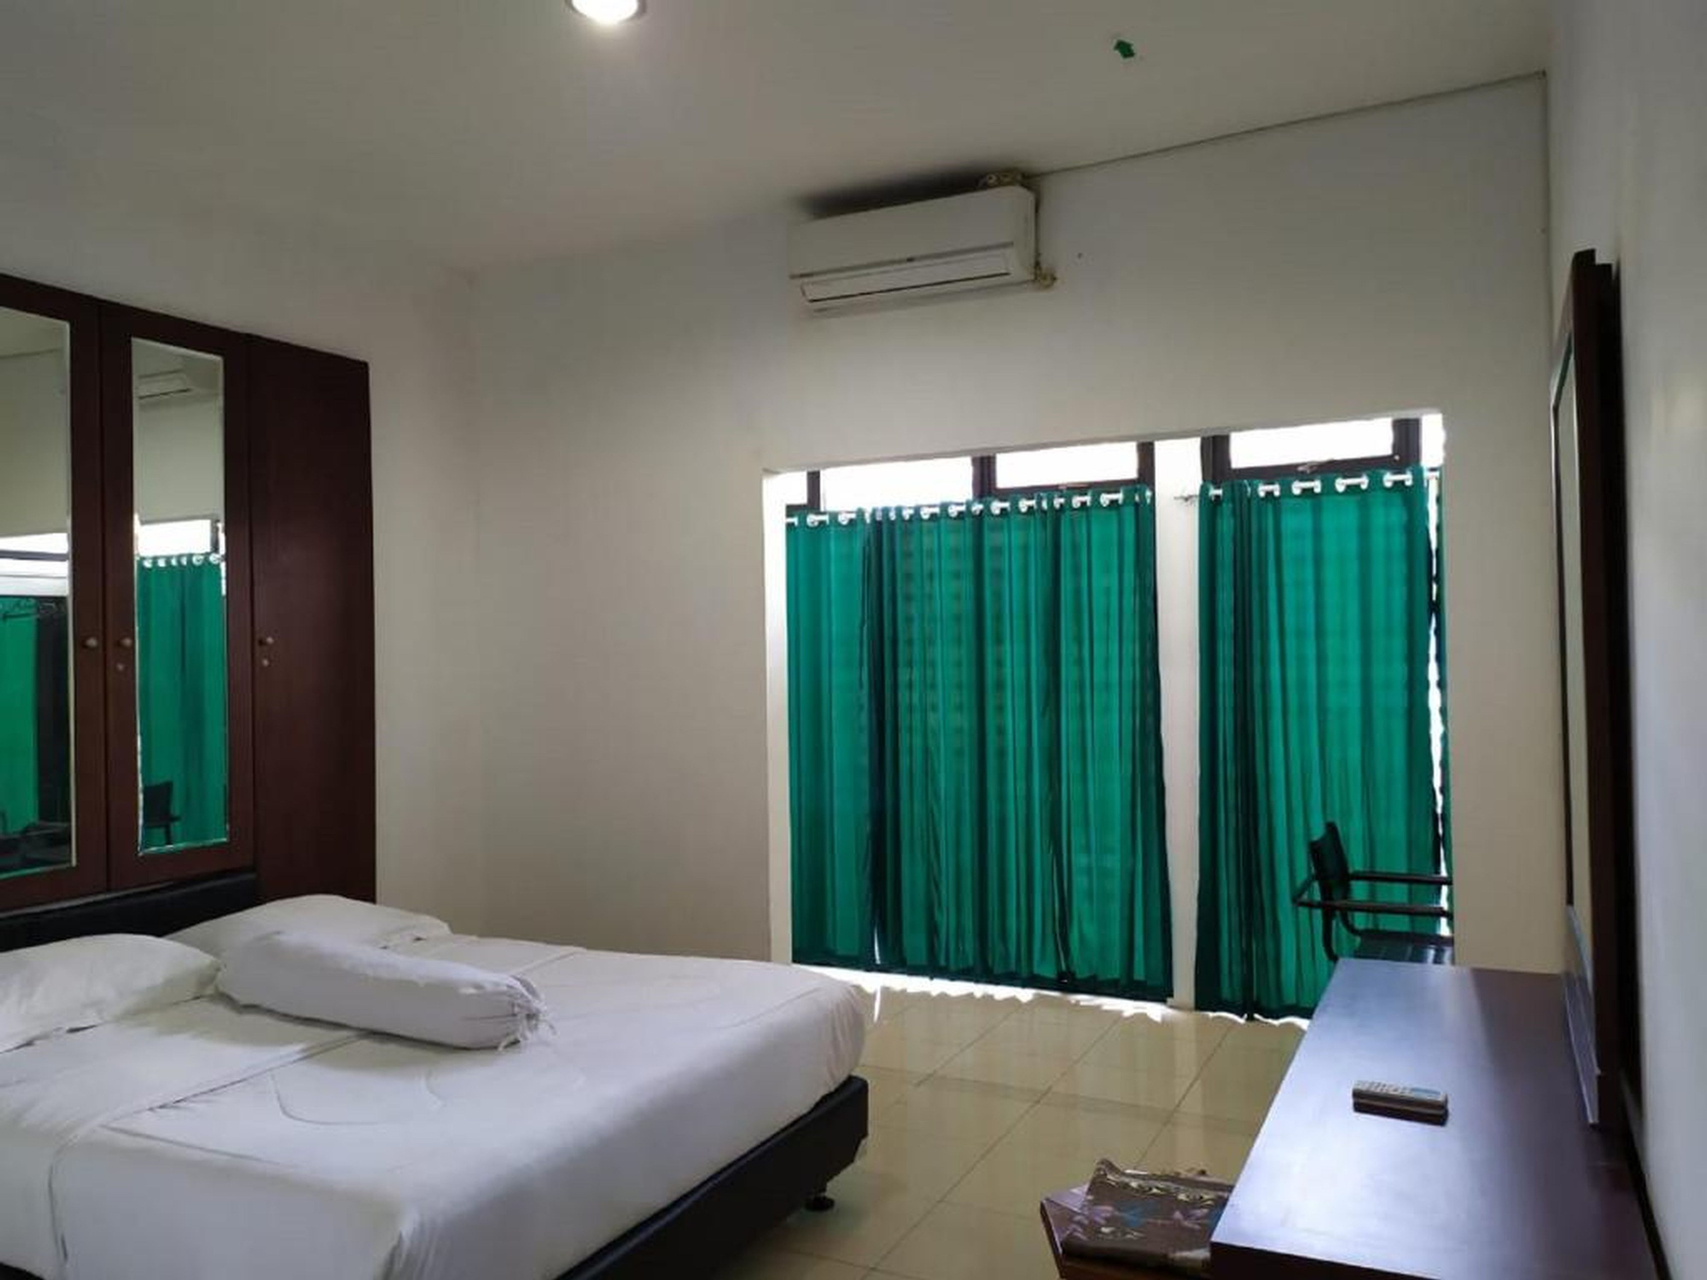 Bedroom 2, Graha HT Sumantri RedPartner, Tasikmalaya